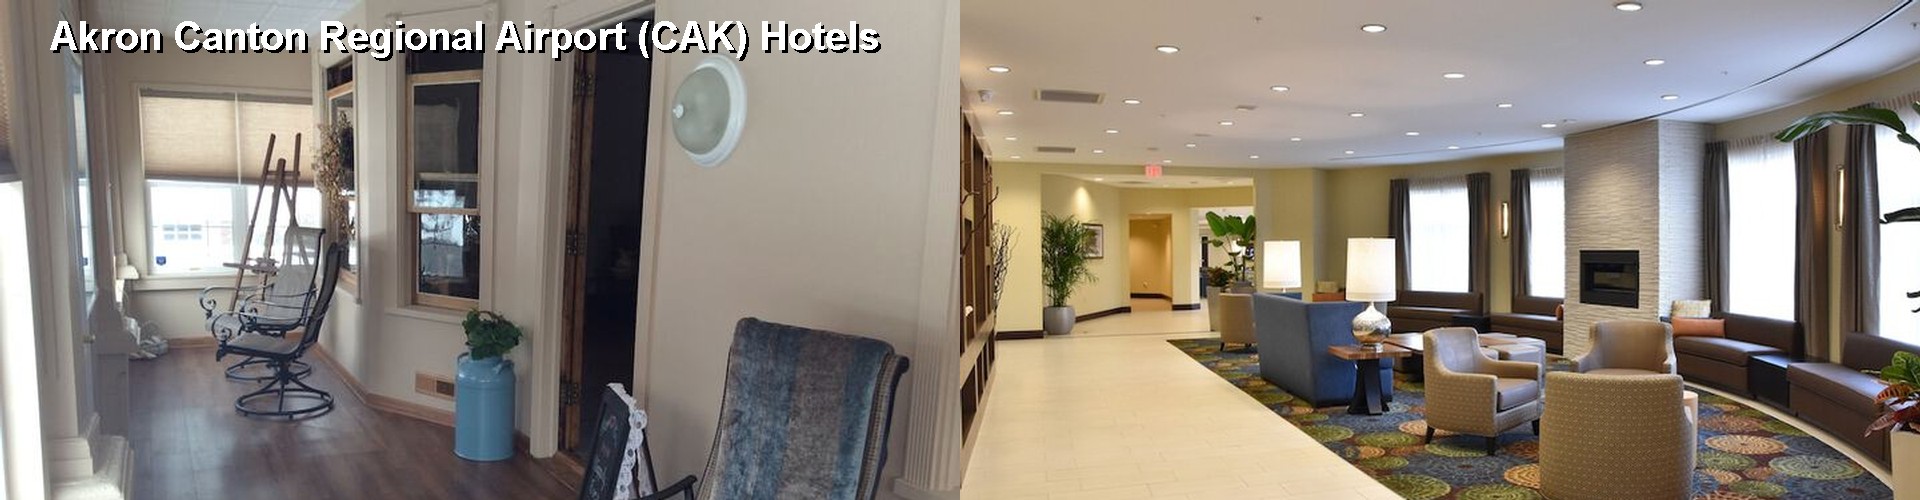 5 Best Hotels near Akron Canton Regional Airport (CAK)